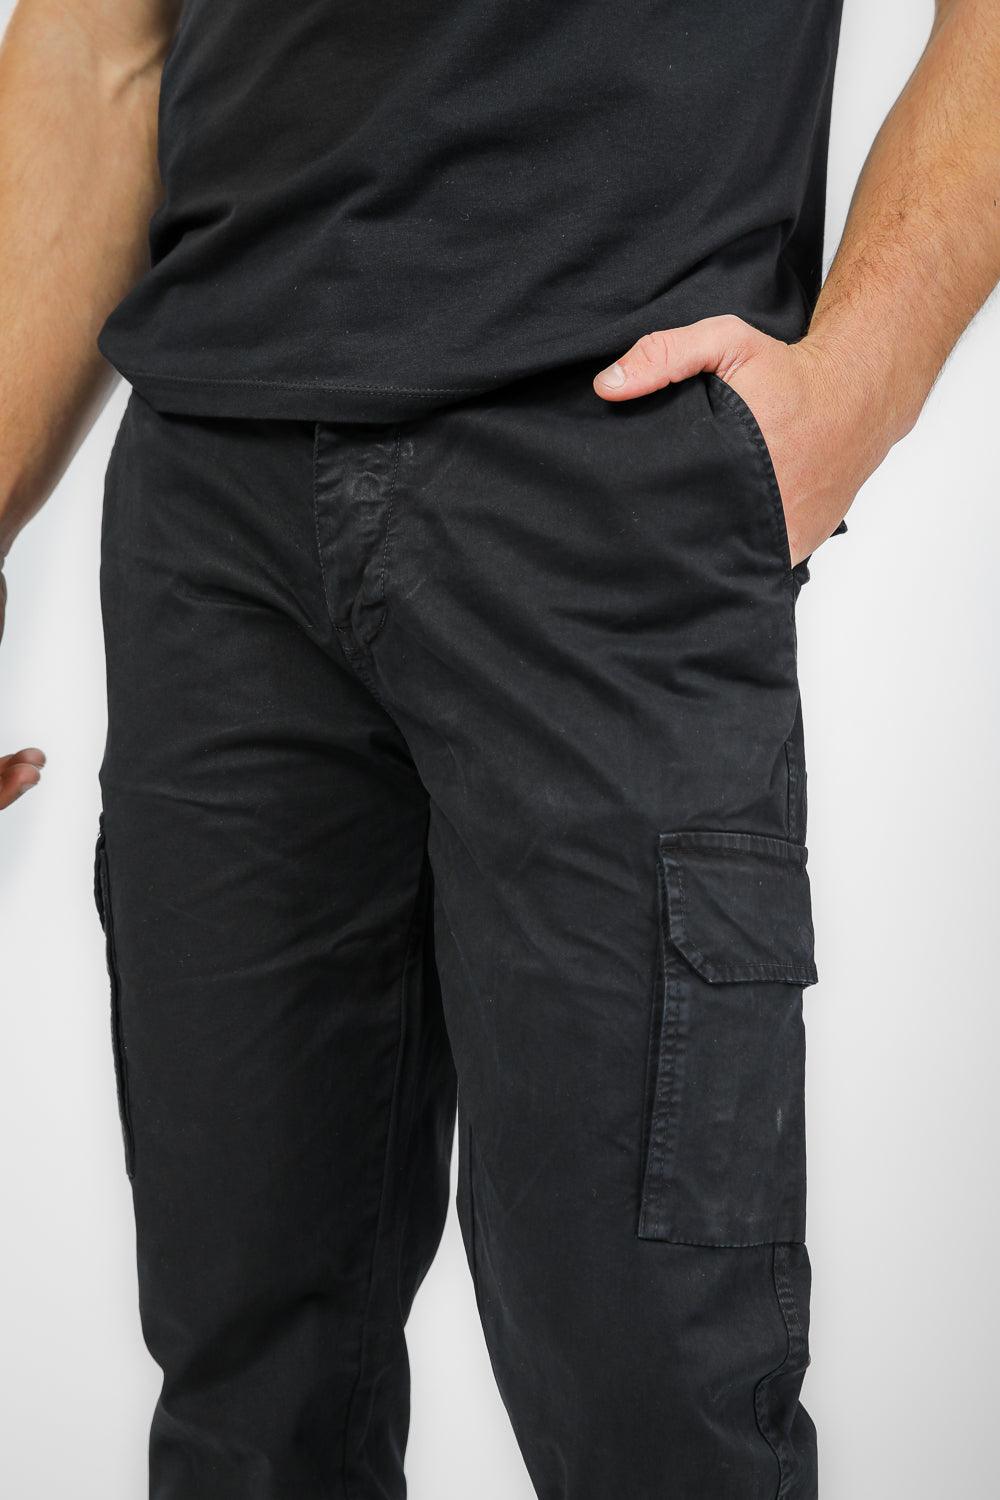 SCORCHER - מכנסי דגמ"ח בצבע שחור - MASHBIR//365